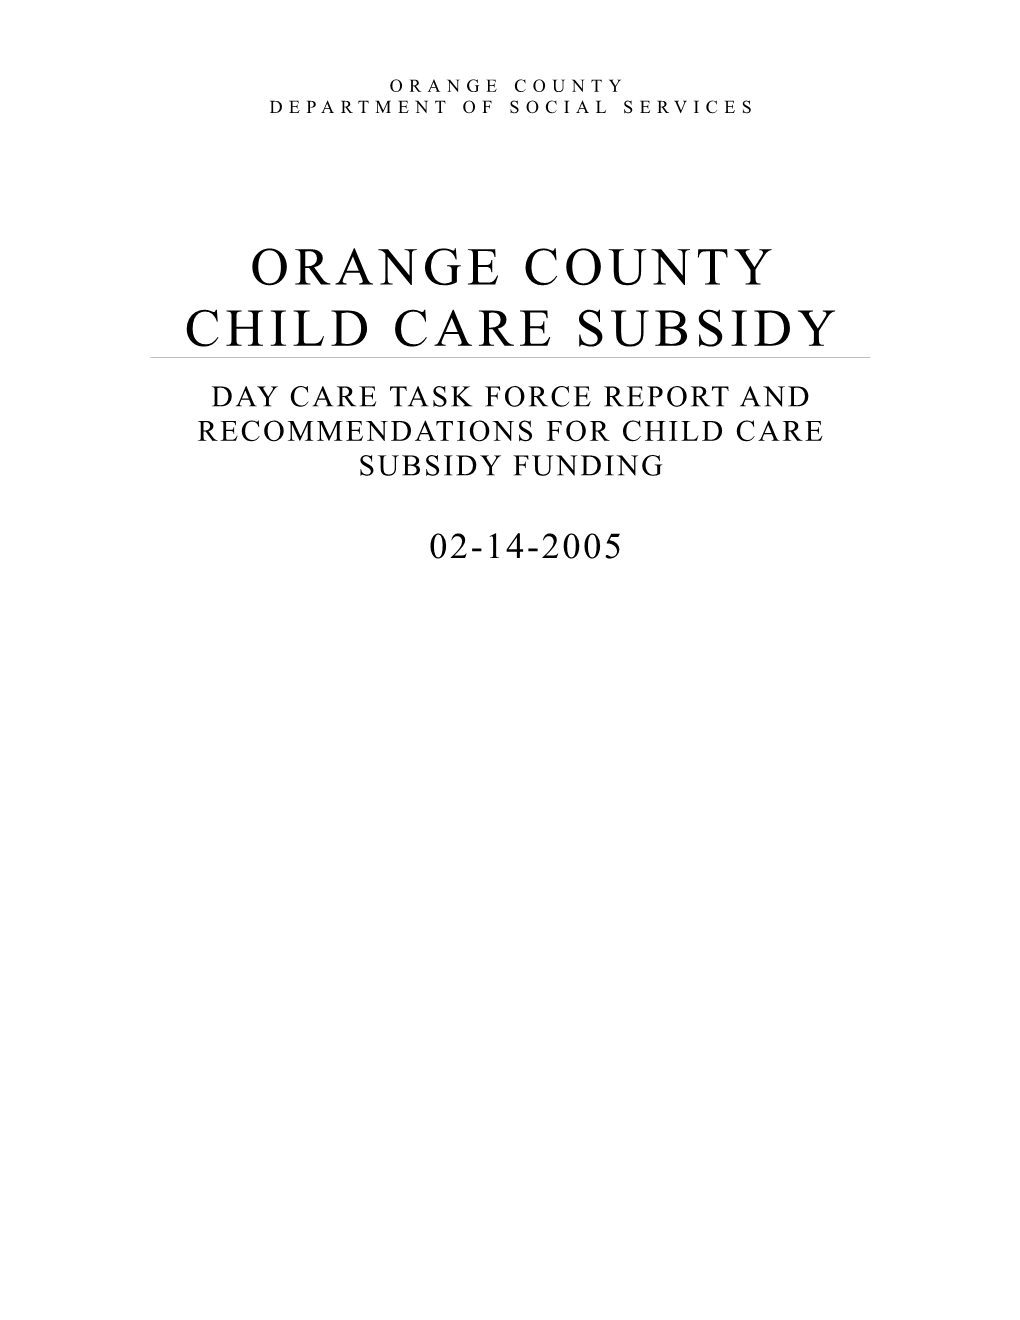 Orange County Child Care Subsidy